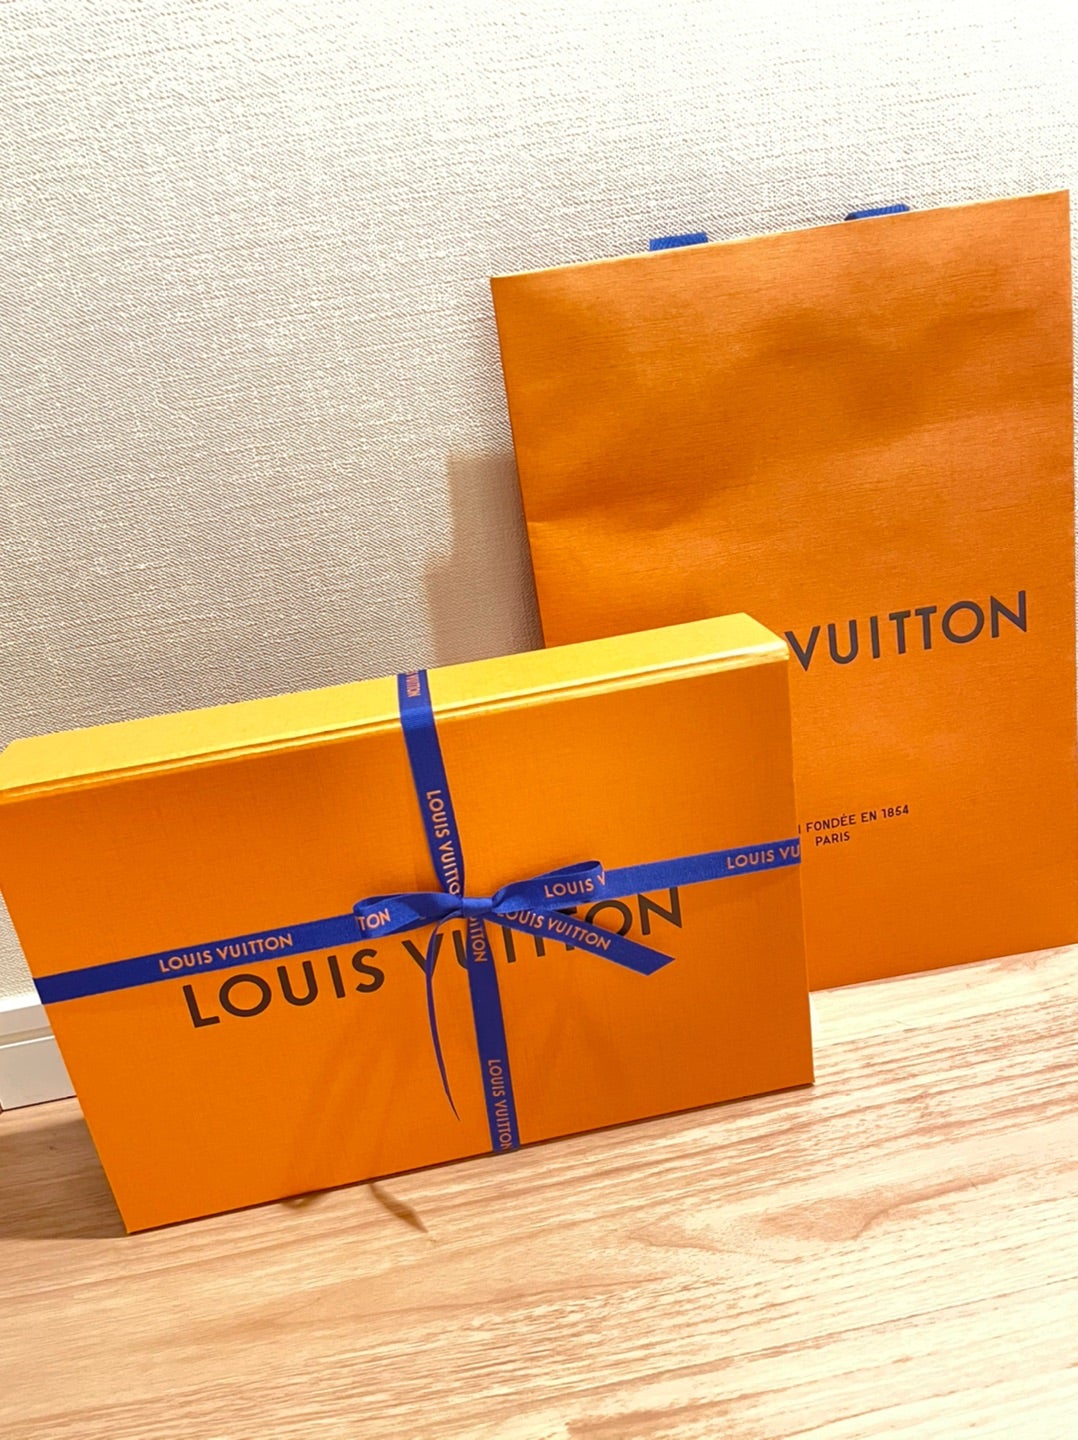 Louis Vuittonのマフラー for him☆プレゼント物語（笑） | ♡momo's sweet life♡〜東京女子diary♪〜